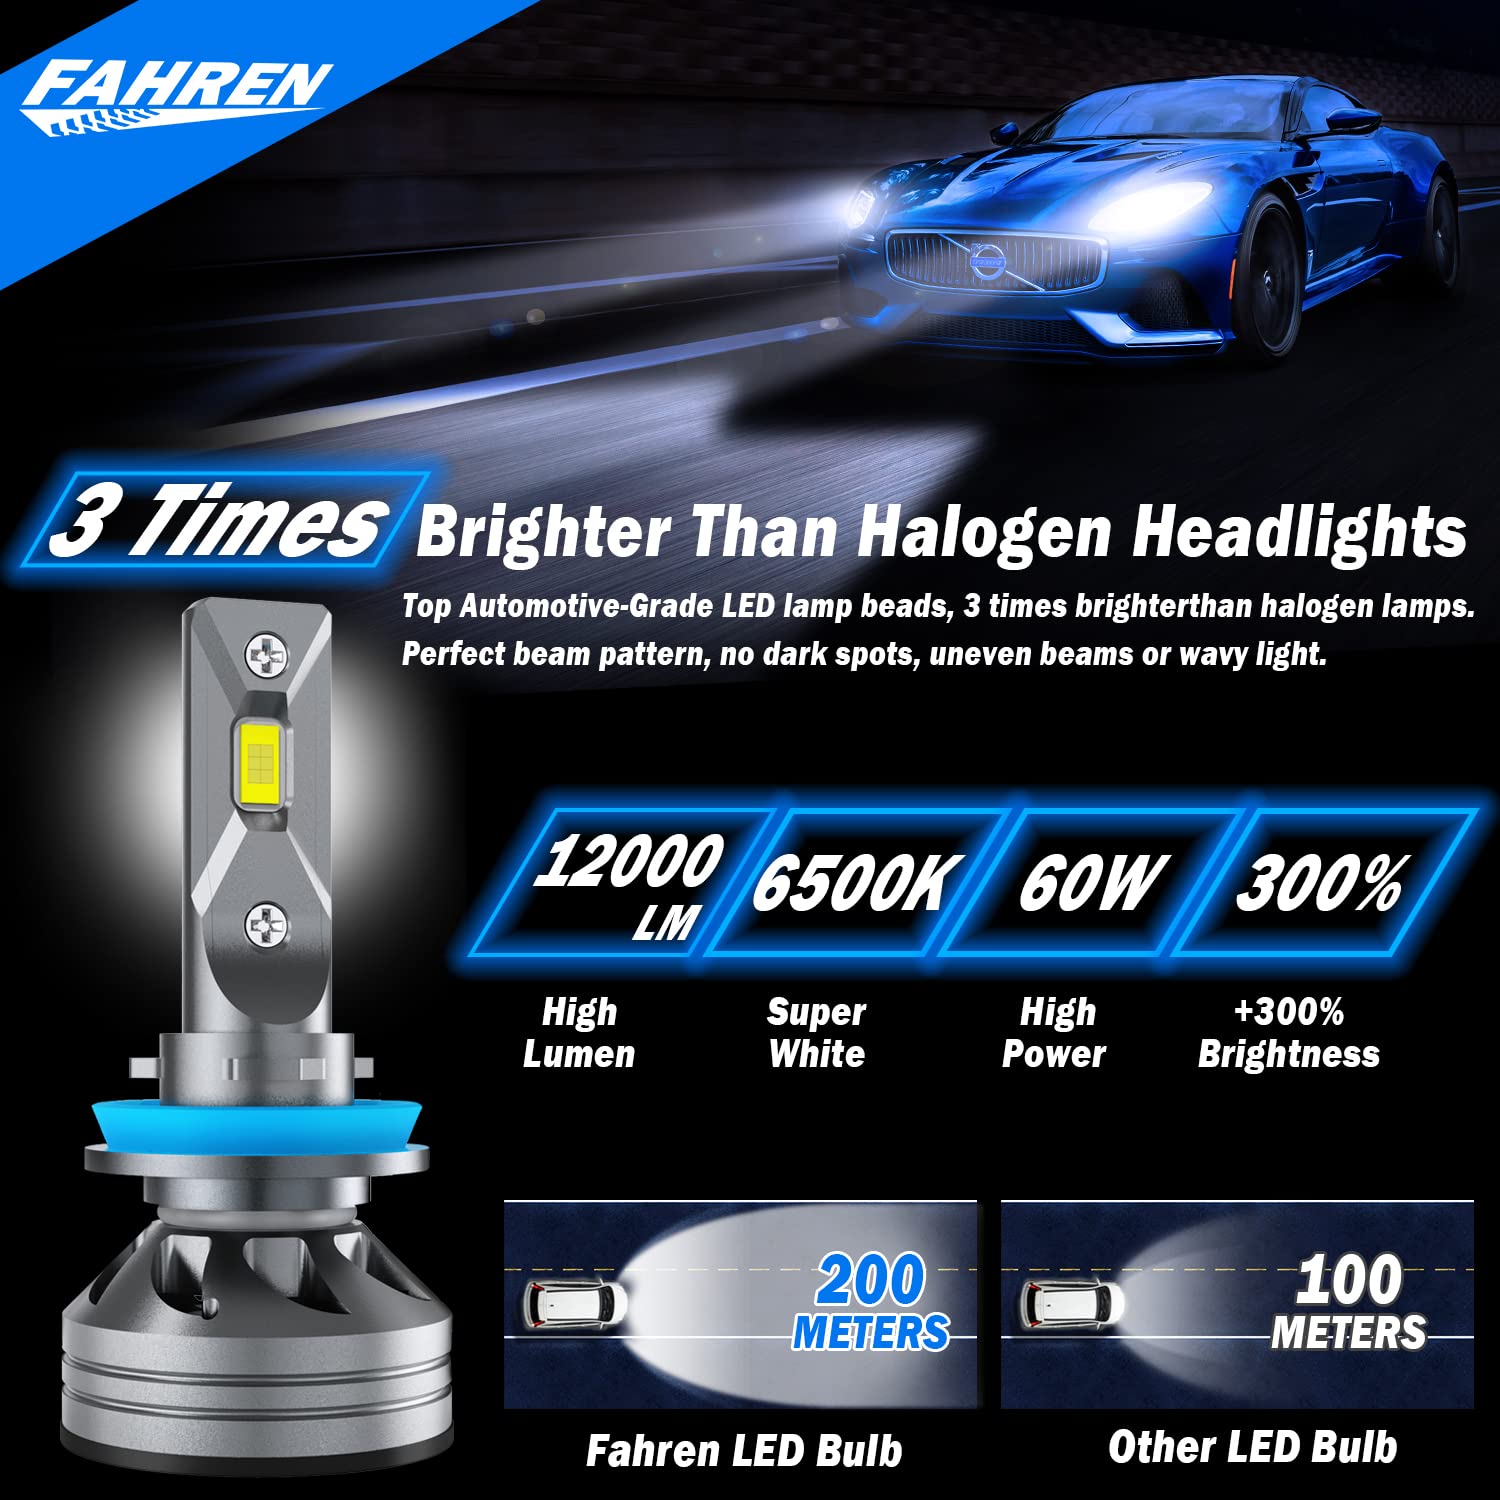 Fahren H11/H9/H8 LED Headlight Bulbs, 60W 10000 Lumens Super Bright LED Headlights Conversion Kit 6500K Cool White IP68 Waterproof, Pack of 2